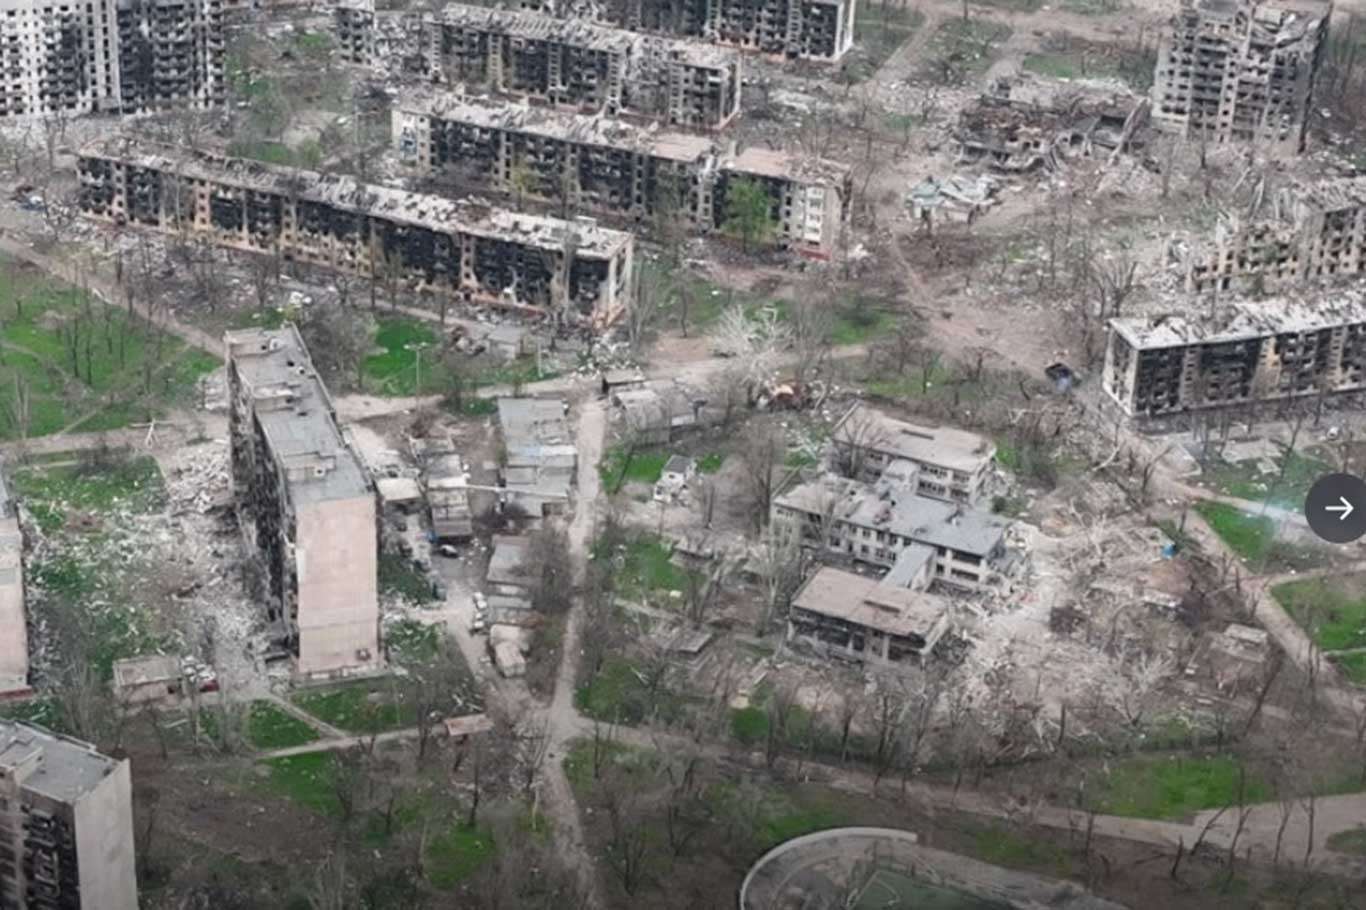 Ukraine: About 7,000-8,000 civilians left in Russian-occupied Sievierodonetsk